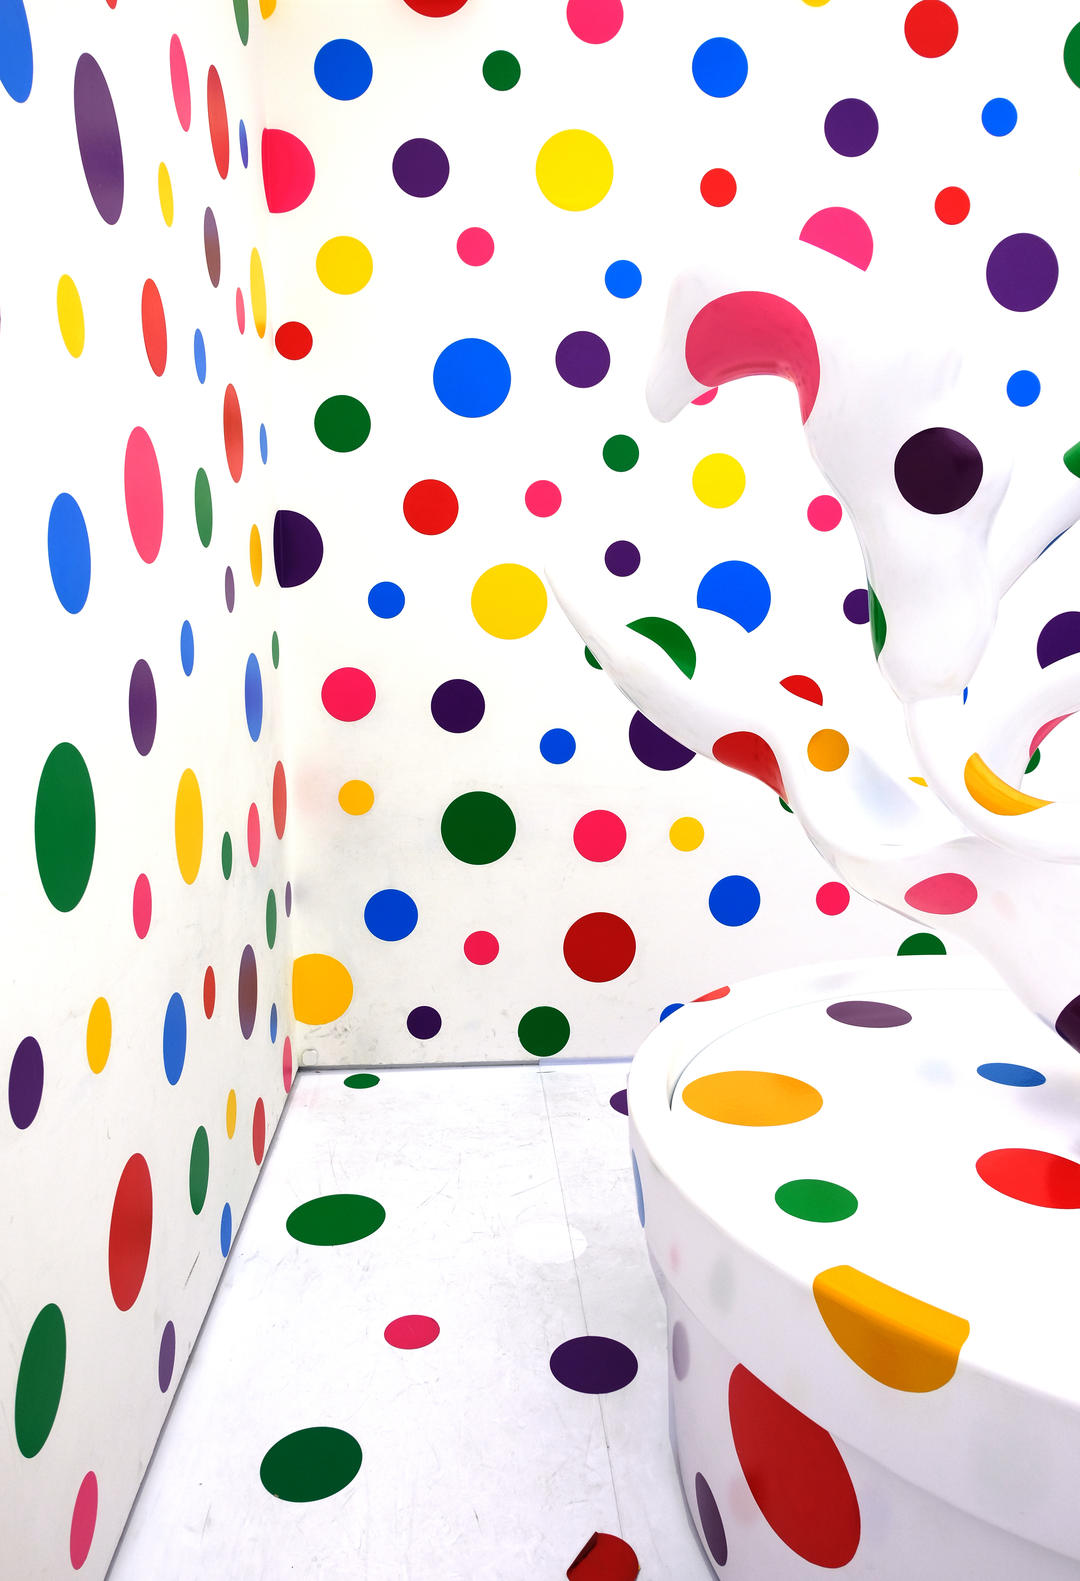 Інсталяція Яйо Кусами "Dots Obsession installation"